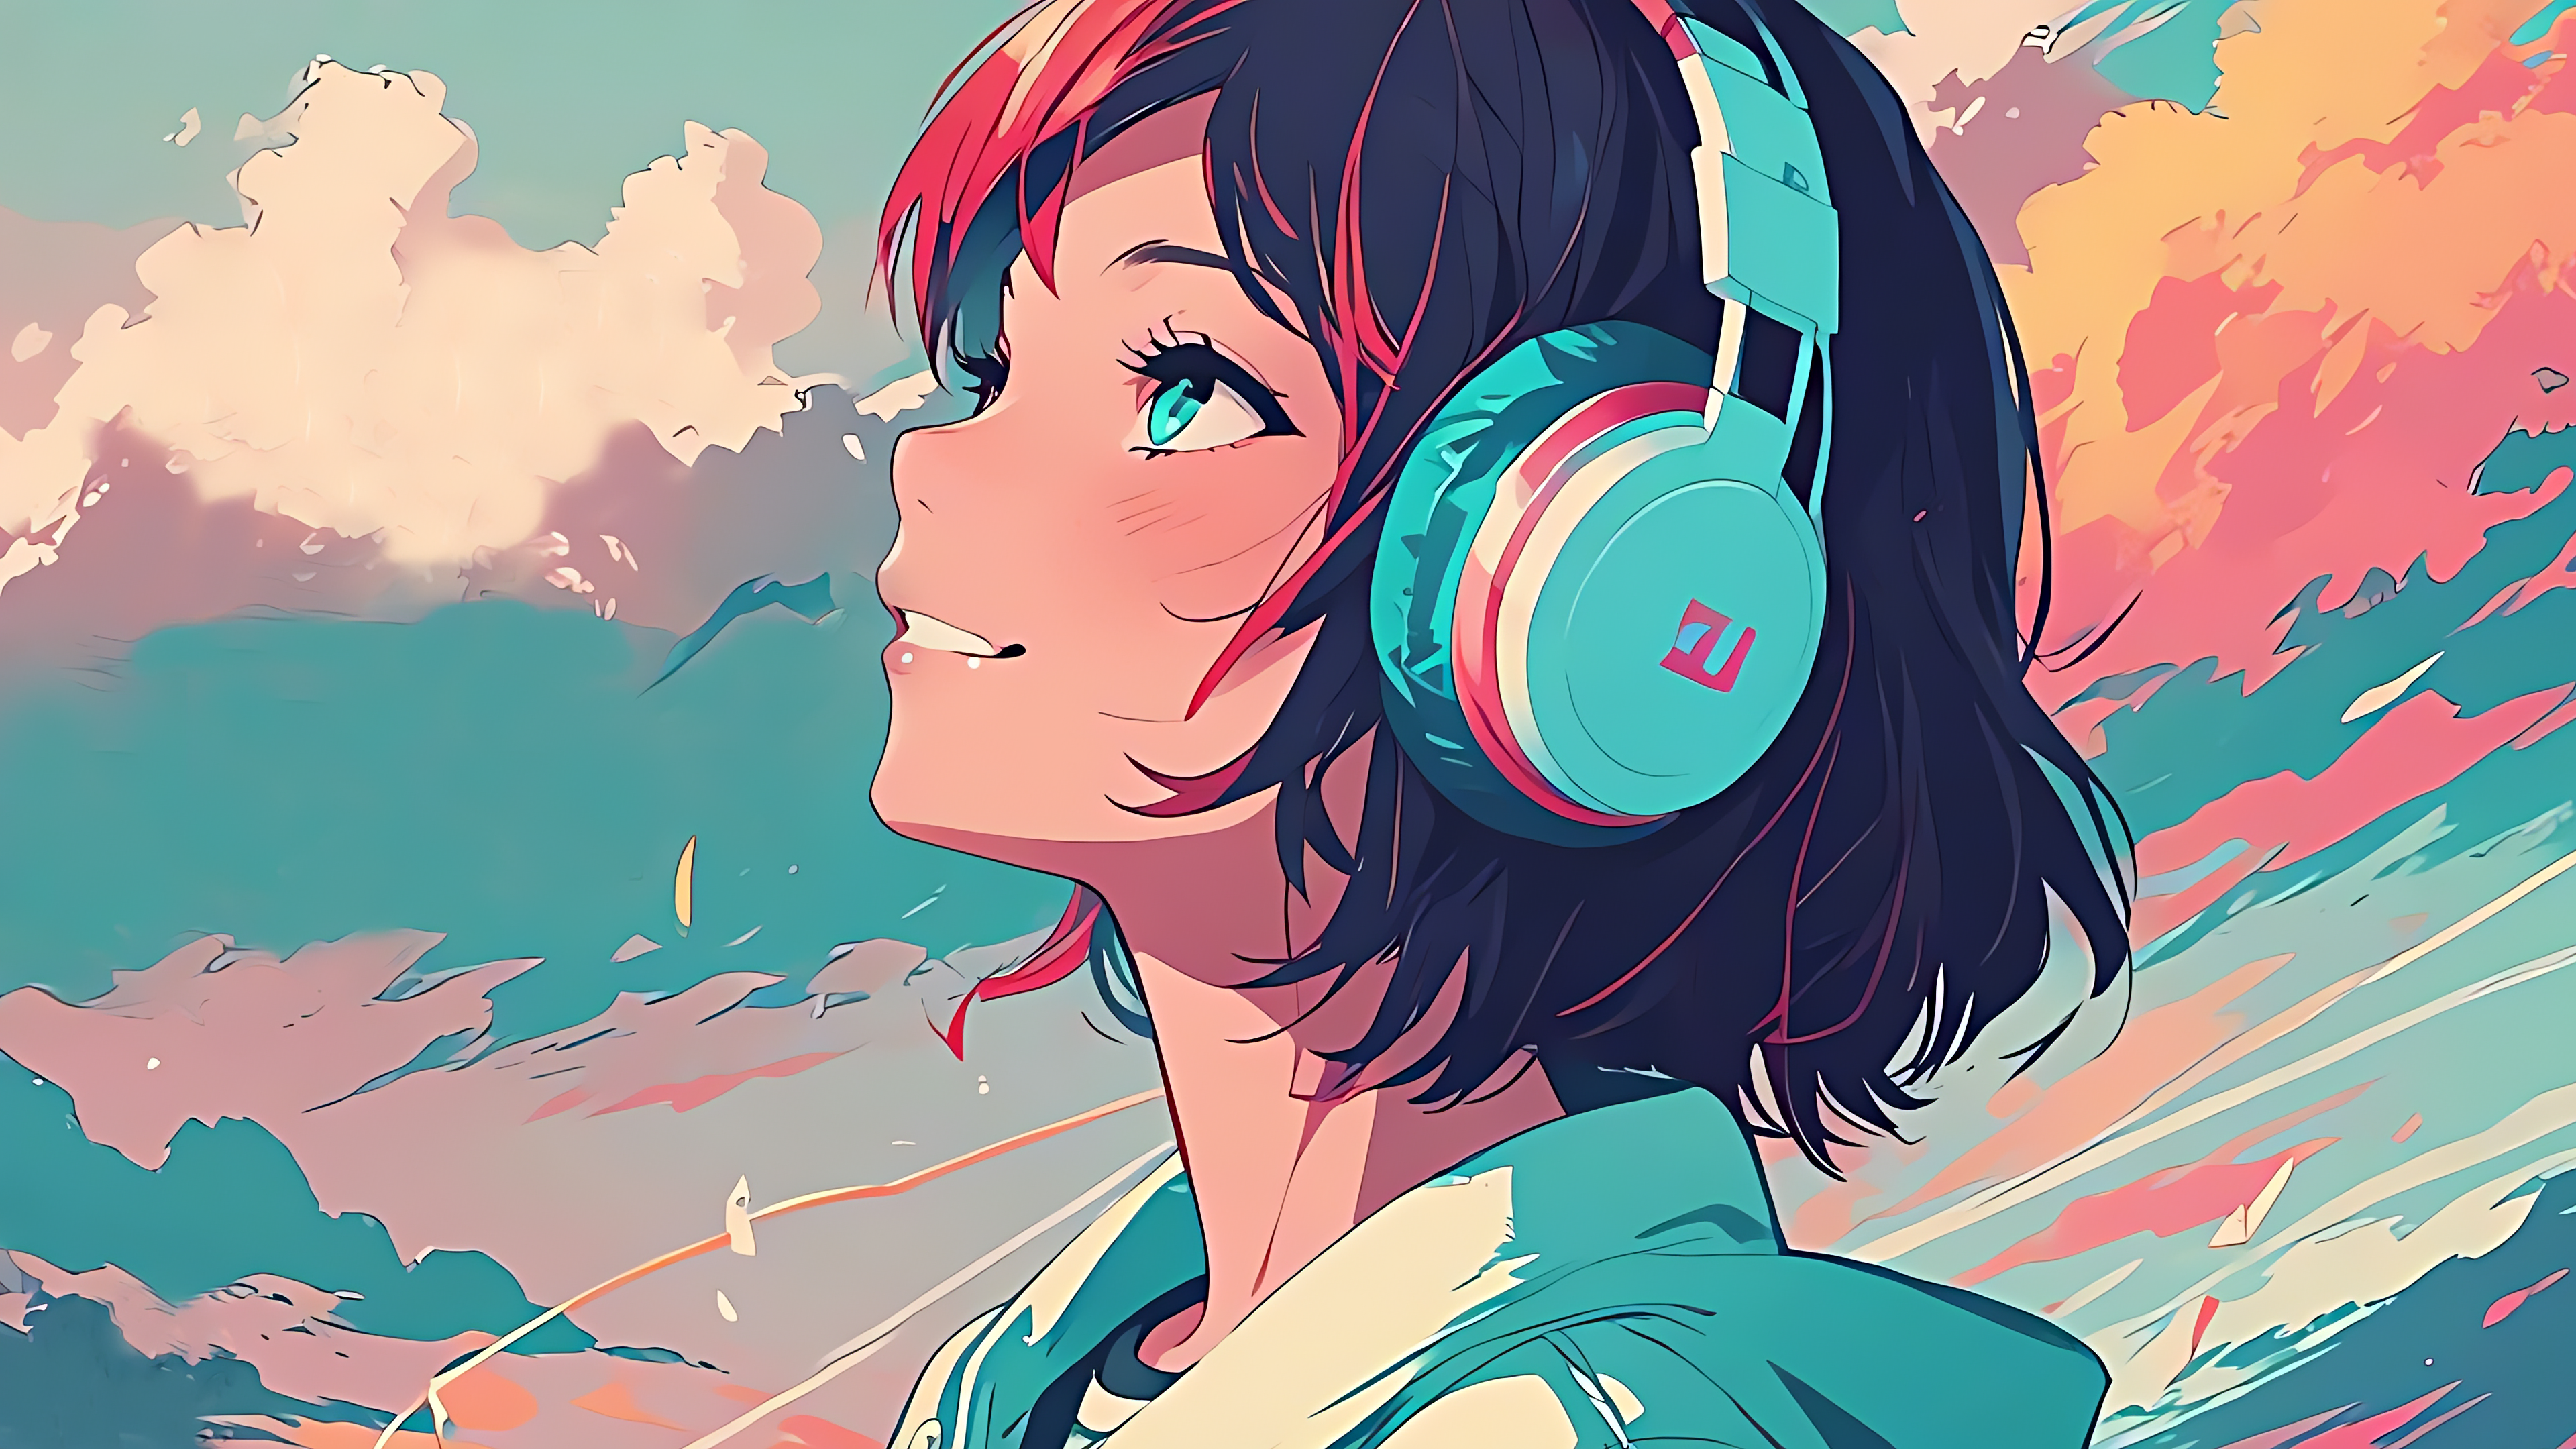 Anime 3840x2160 anime girls Sky (game) minimalism headphones music sketches Pink (artist) smiling Chillhop Music AI art